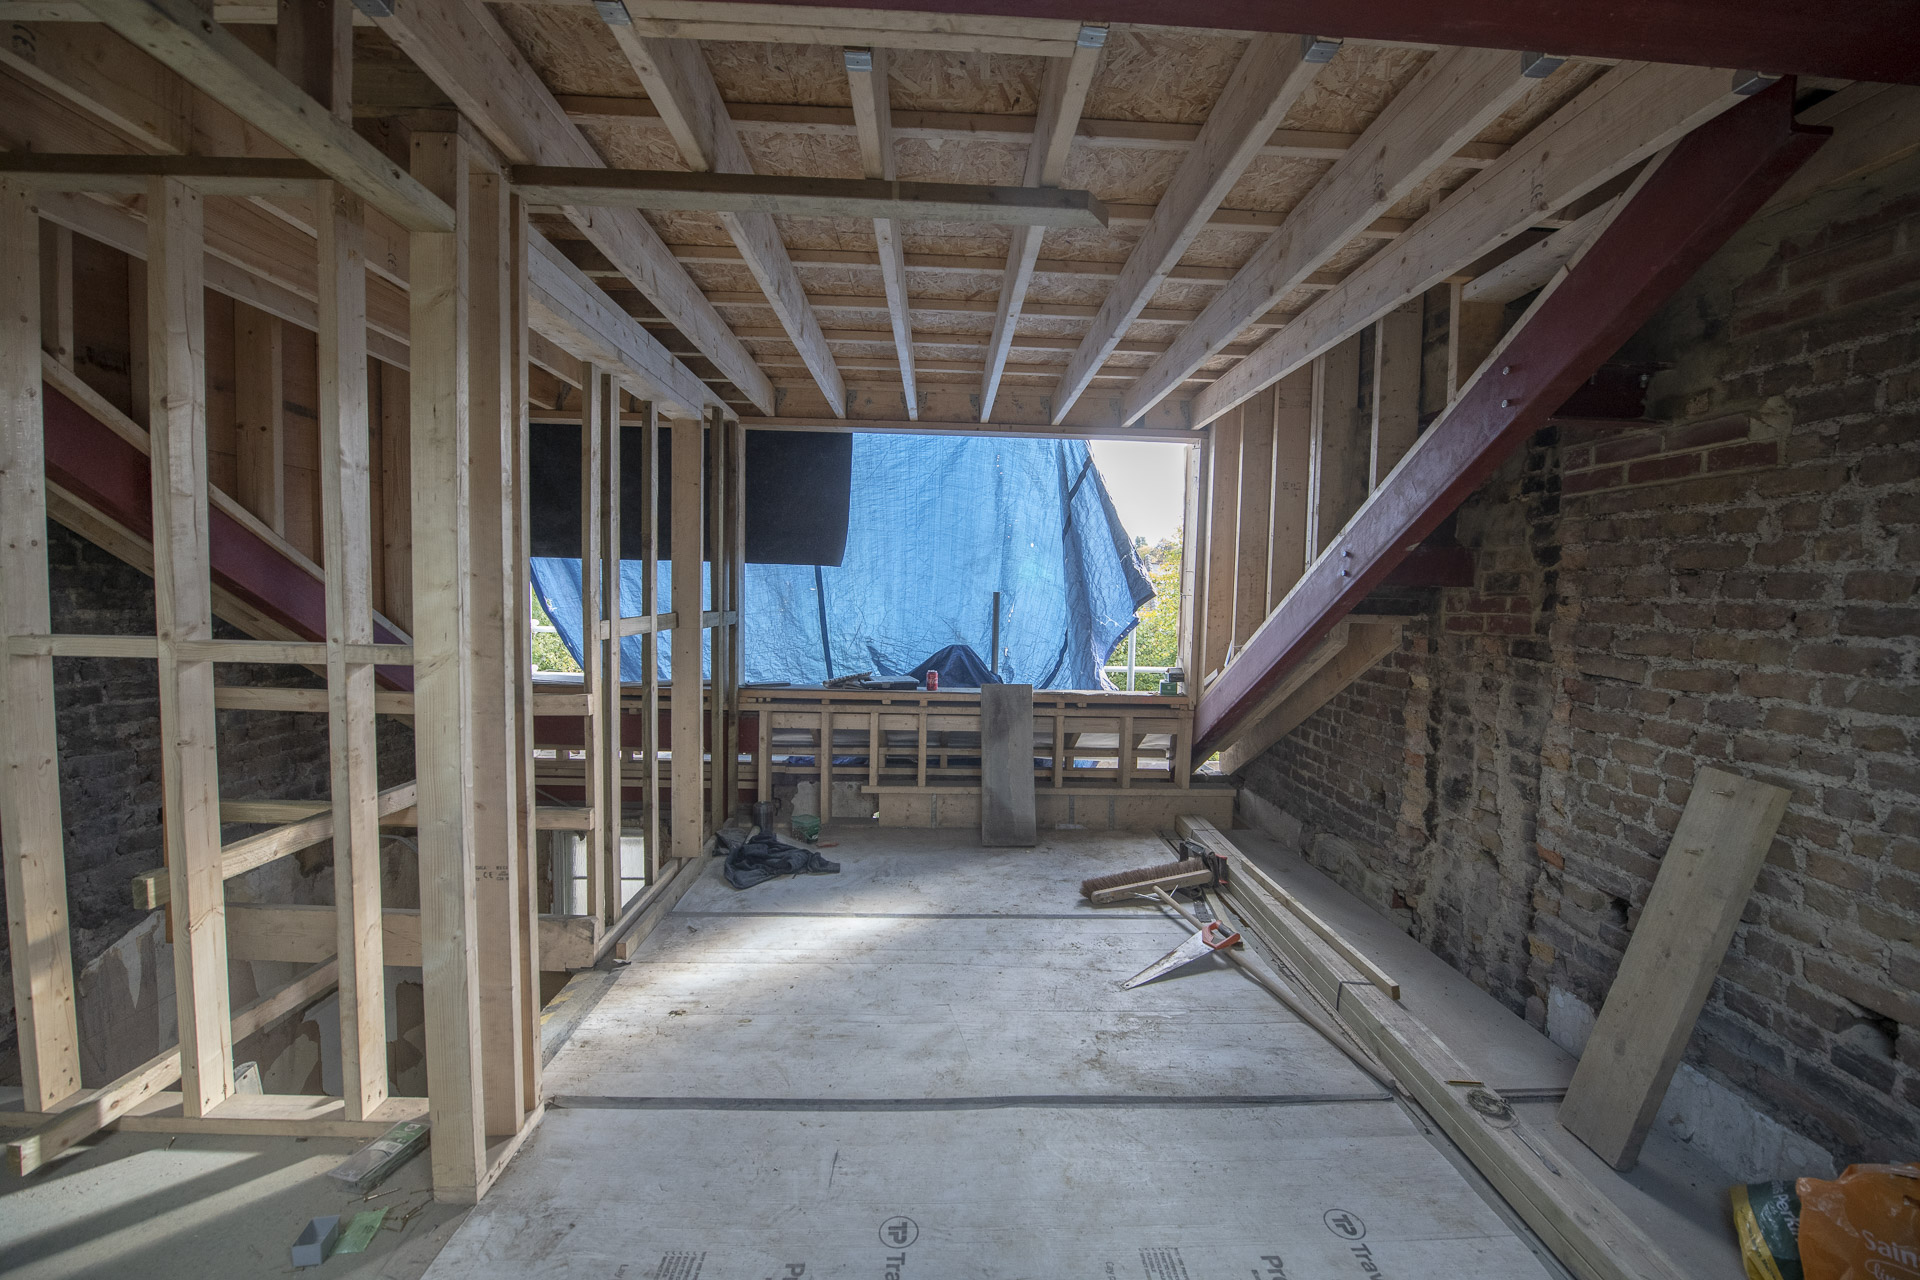 A loft conversion in progress. on site. 